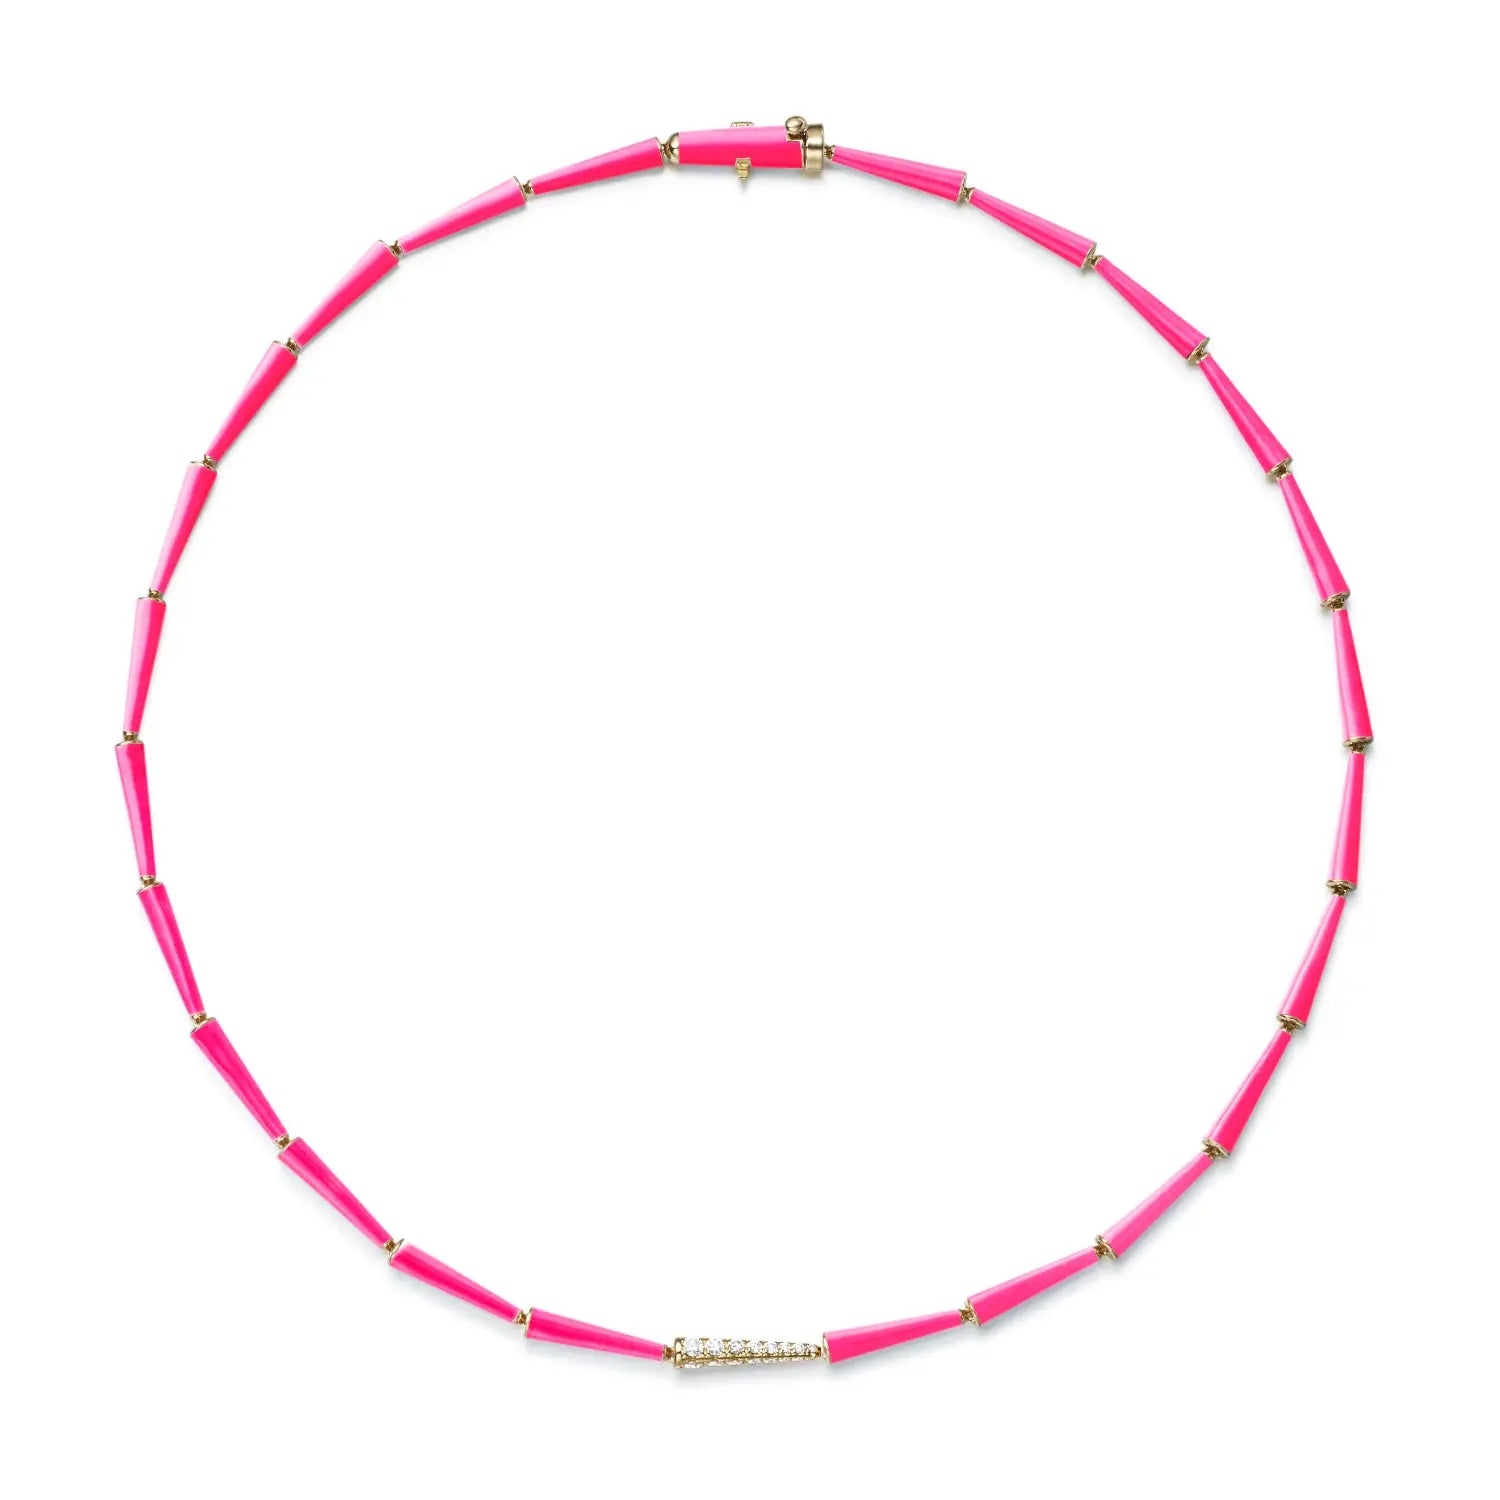 Lola linked necklace- pink enamel - Squash Blossom Vail